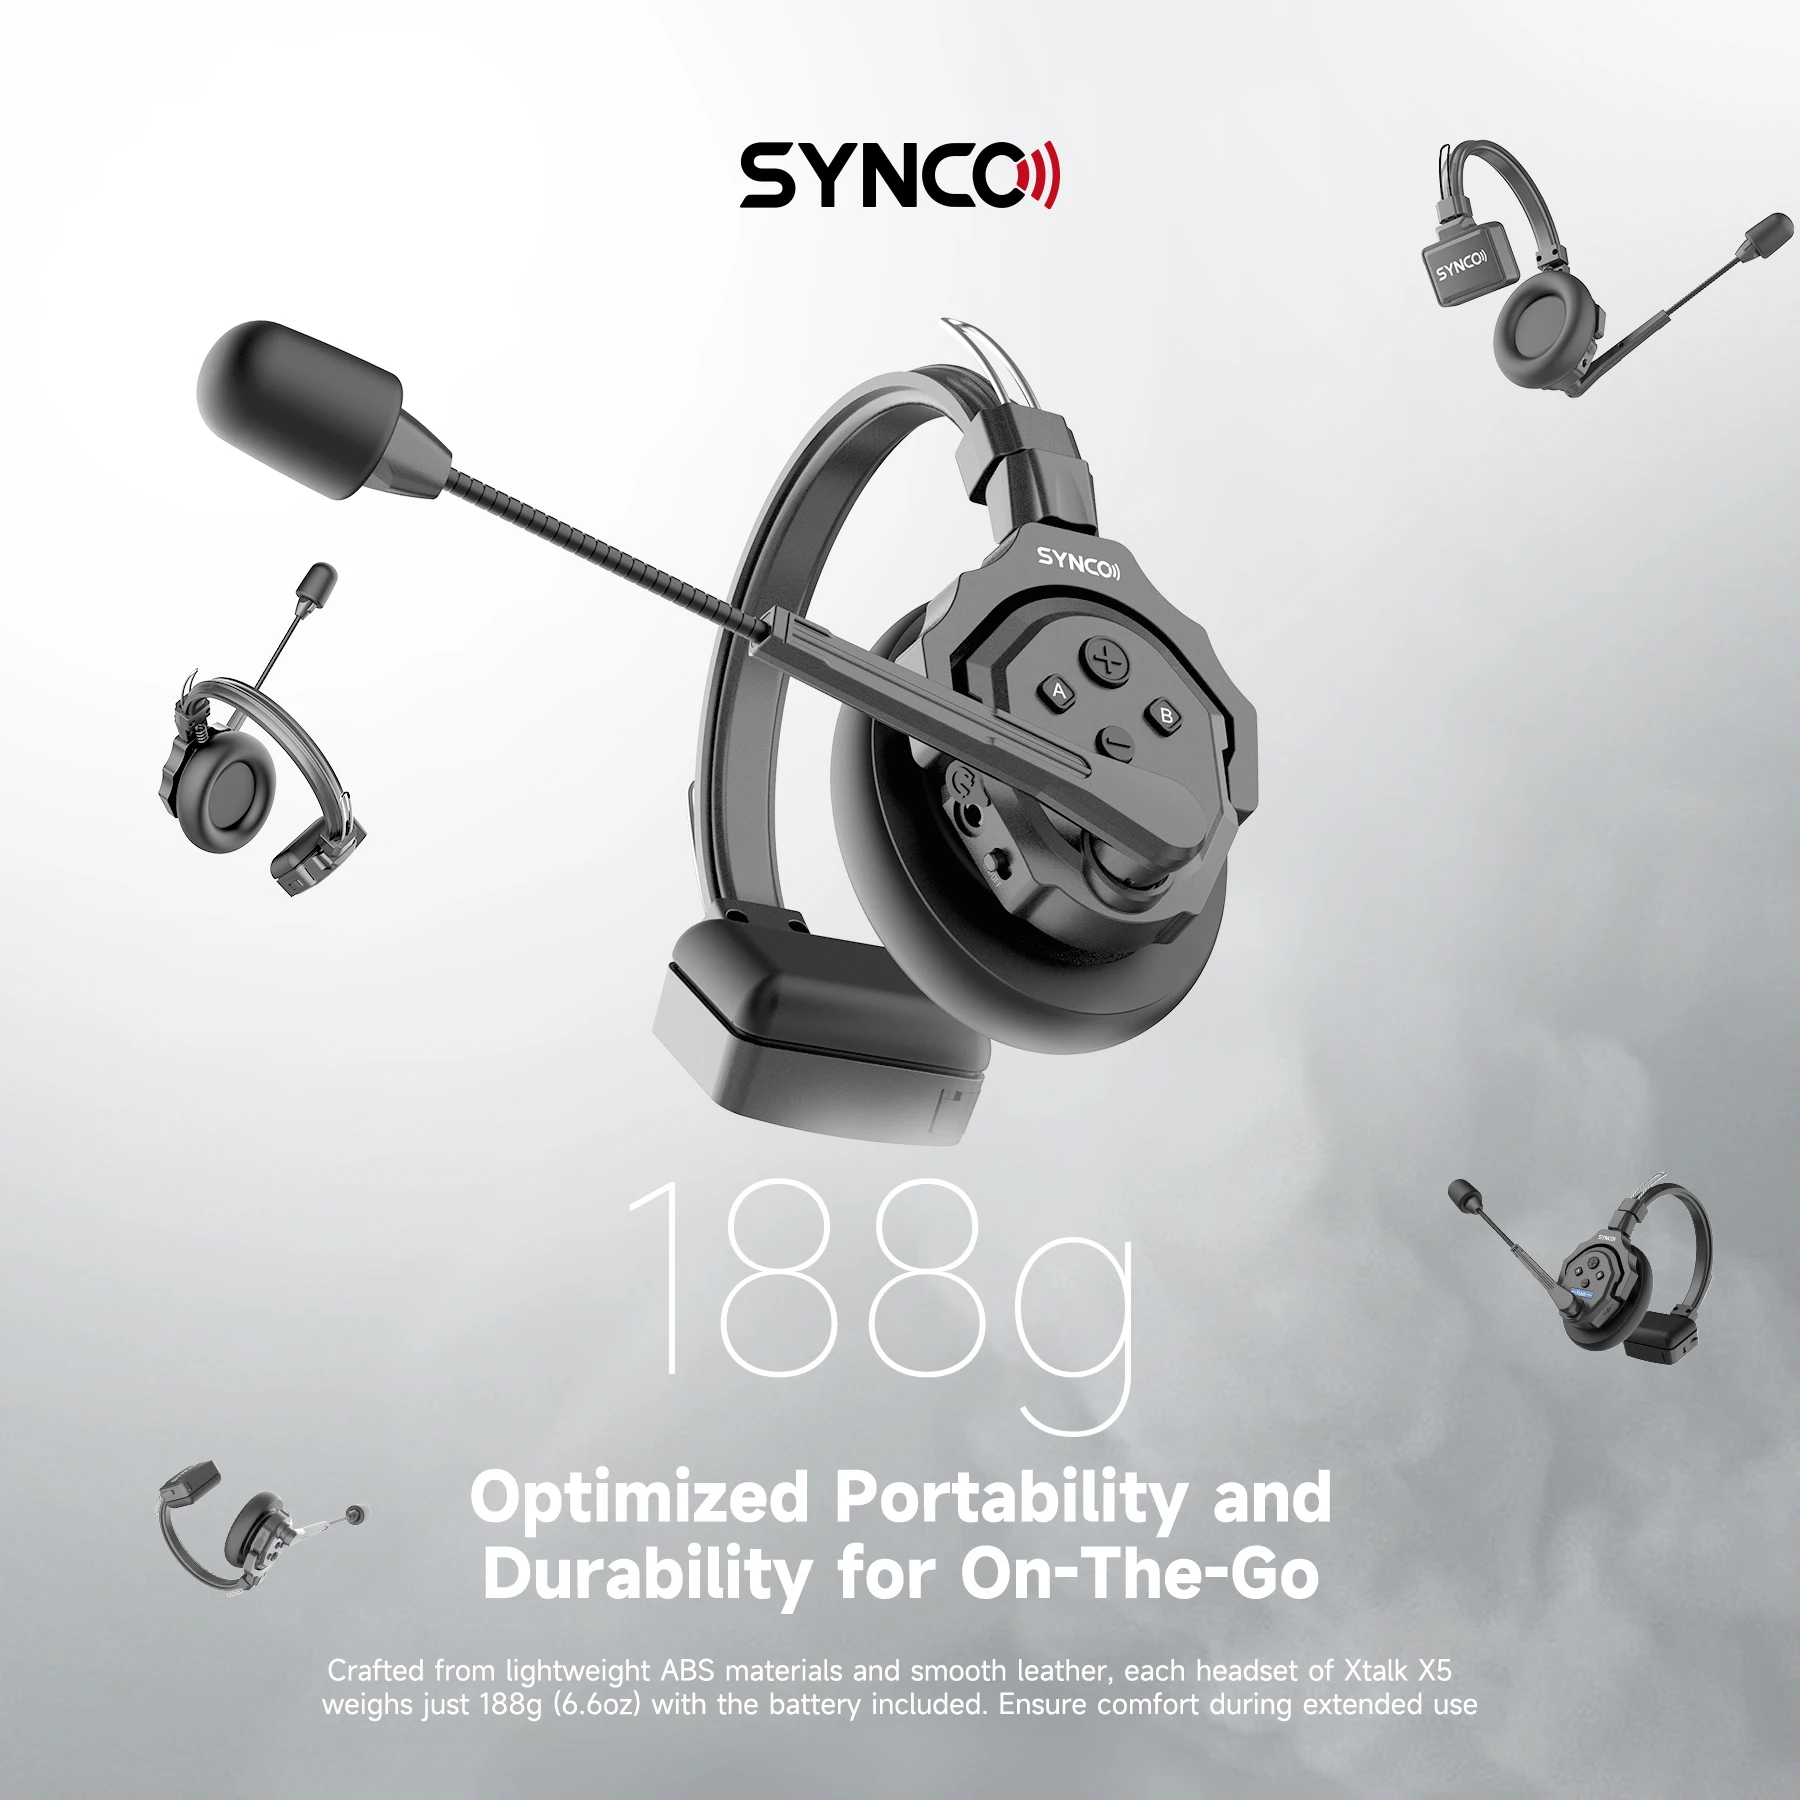 

Synco Xtalk X5 x2 2.4G Full-Duplex Single-Ear Remote Headset Wireless Intercom System for Film Television Shooting Studio